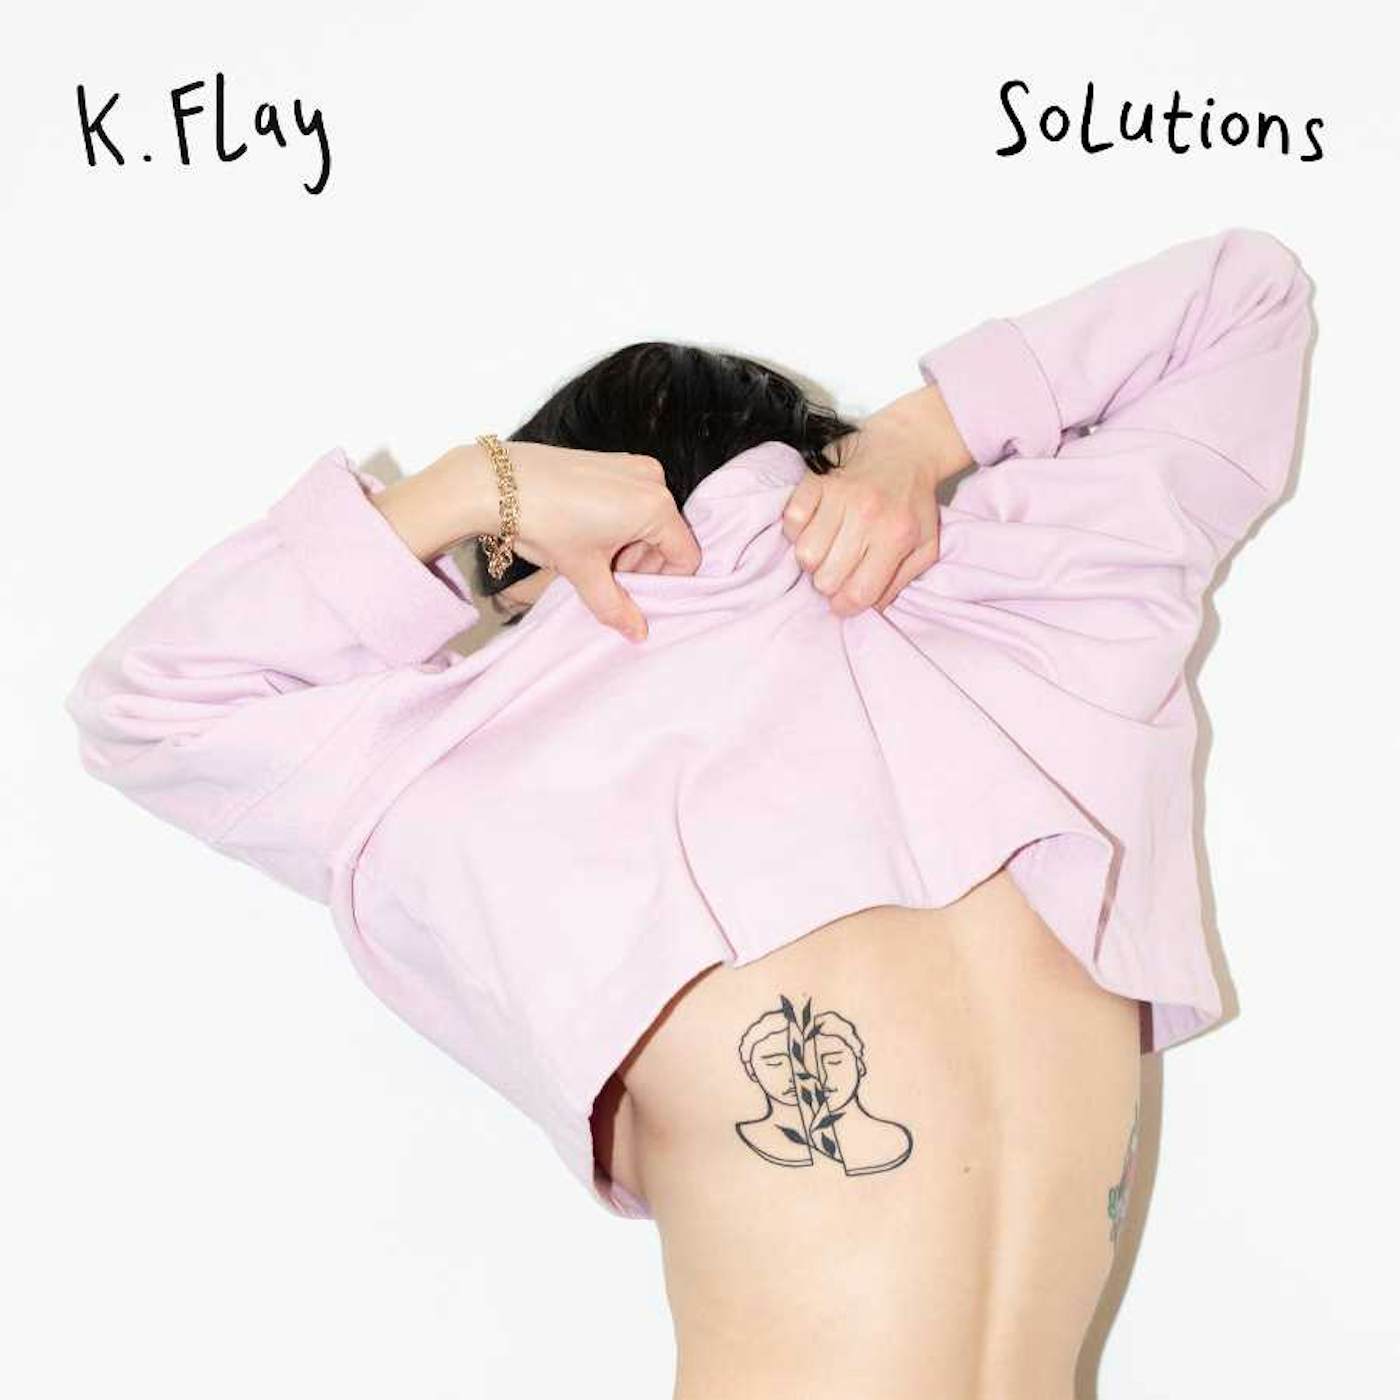 K.Flay SOLUTIONS Vinyl Record